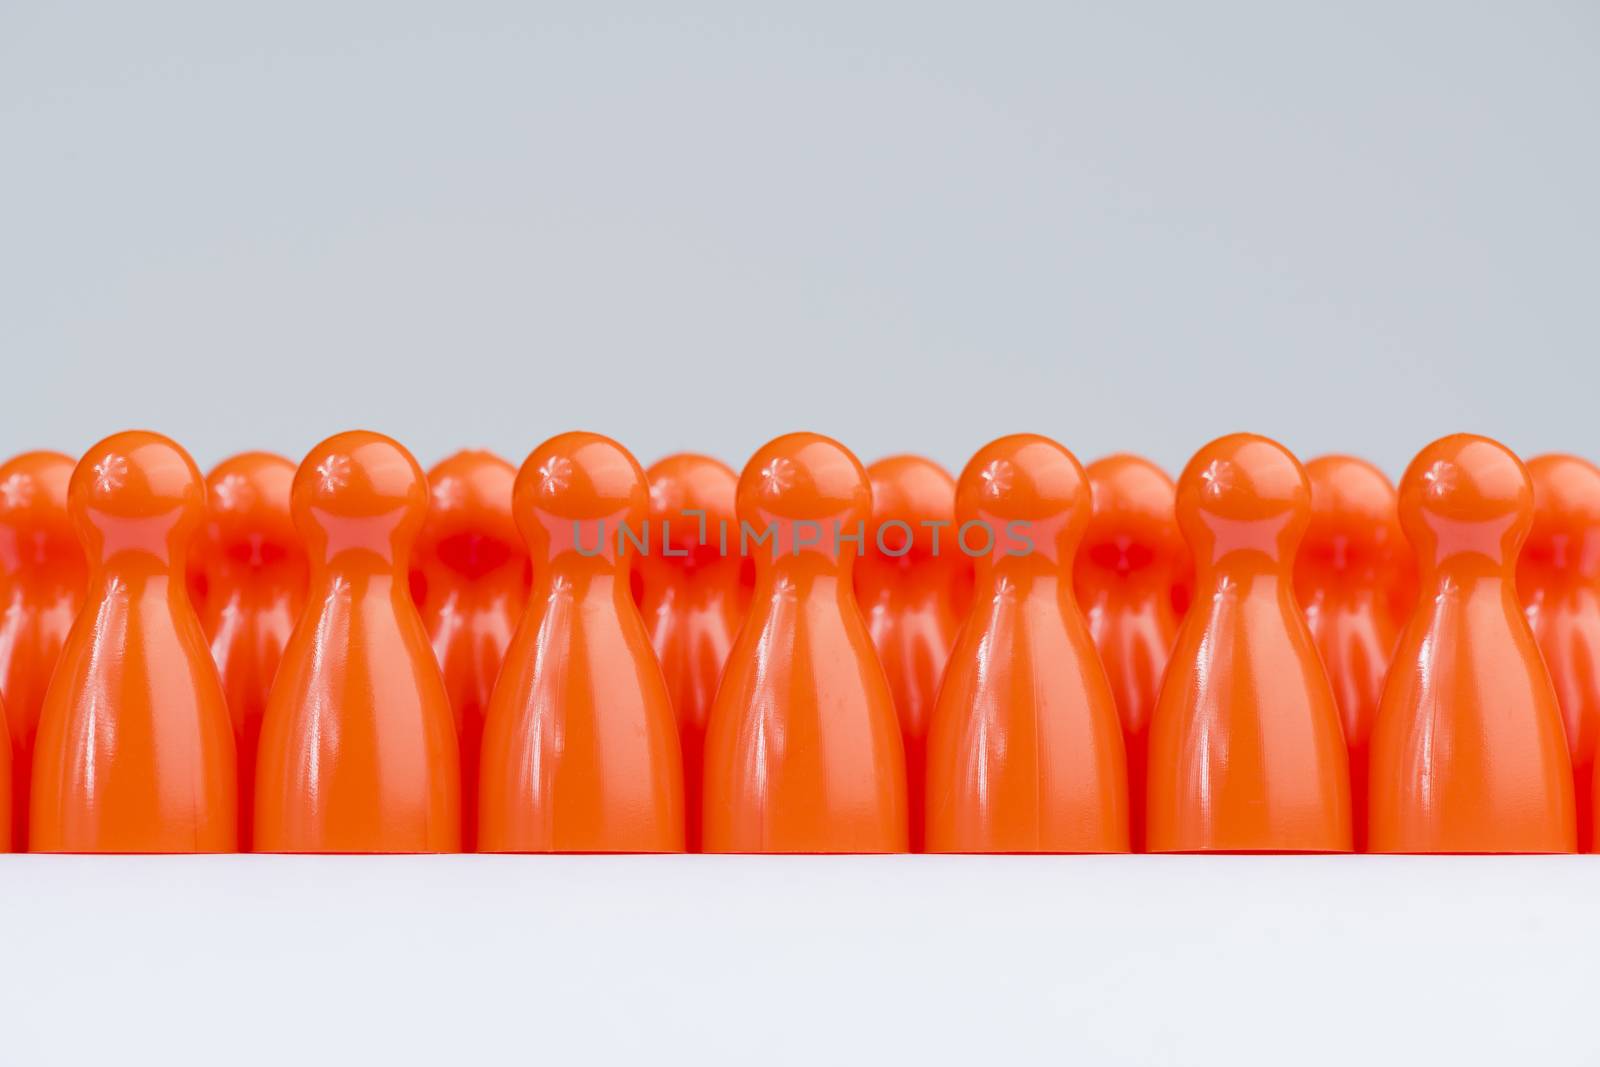 Conceptual orange game by Tofotografie